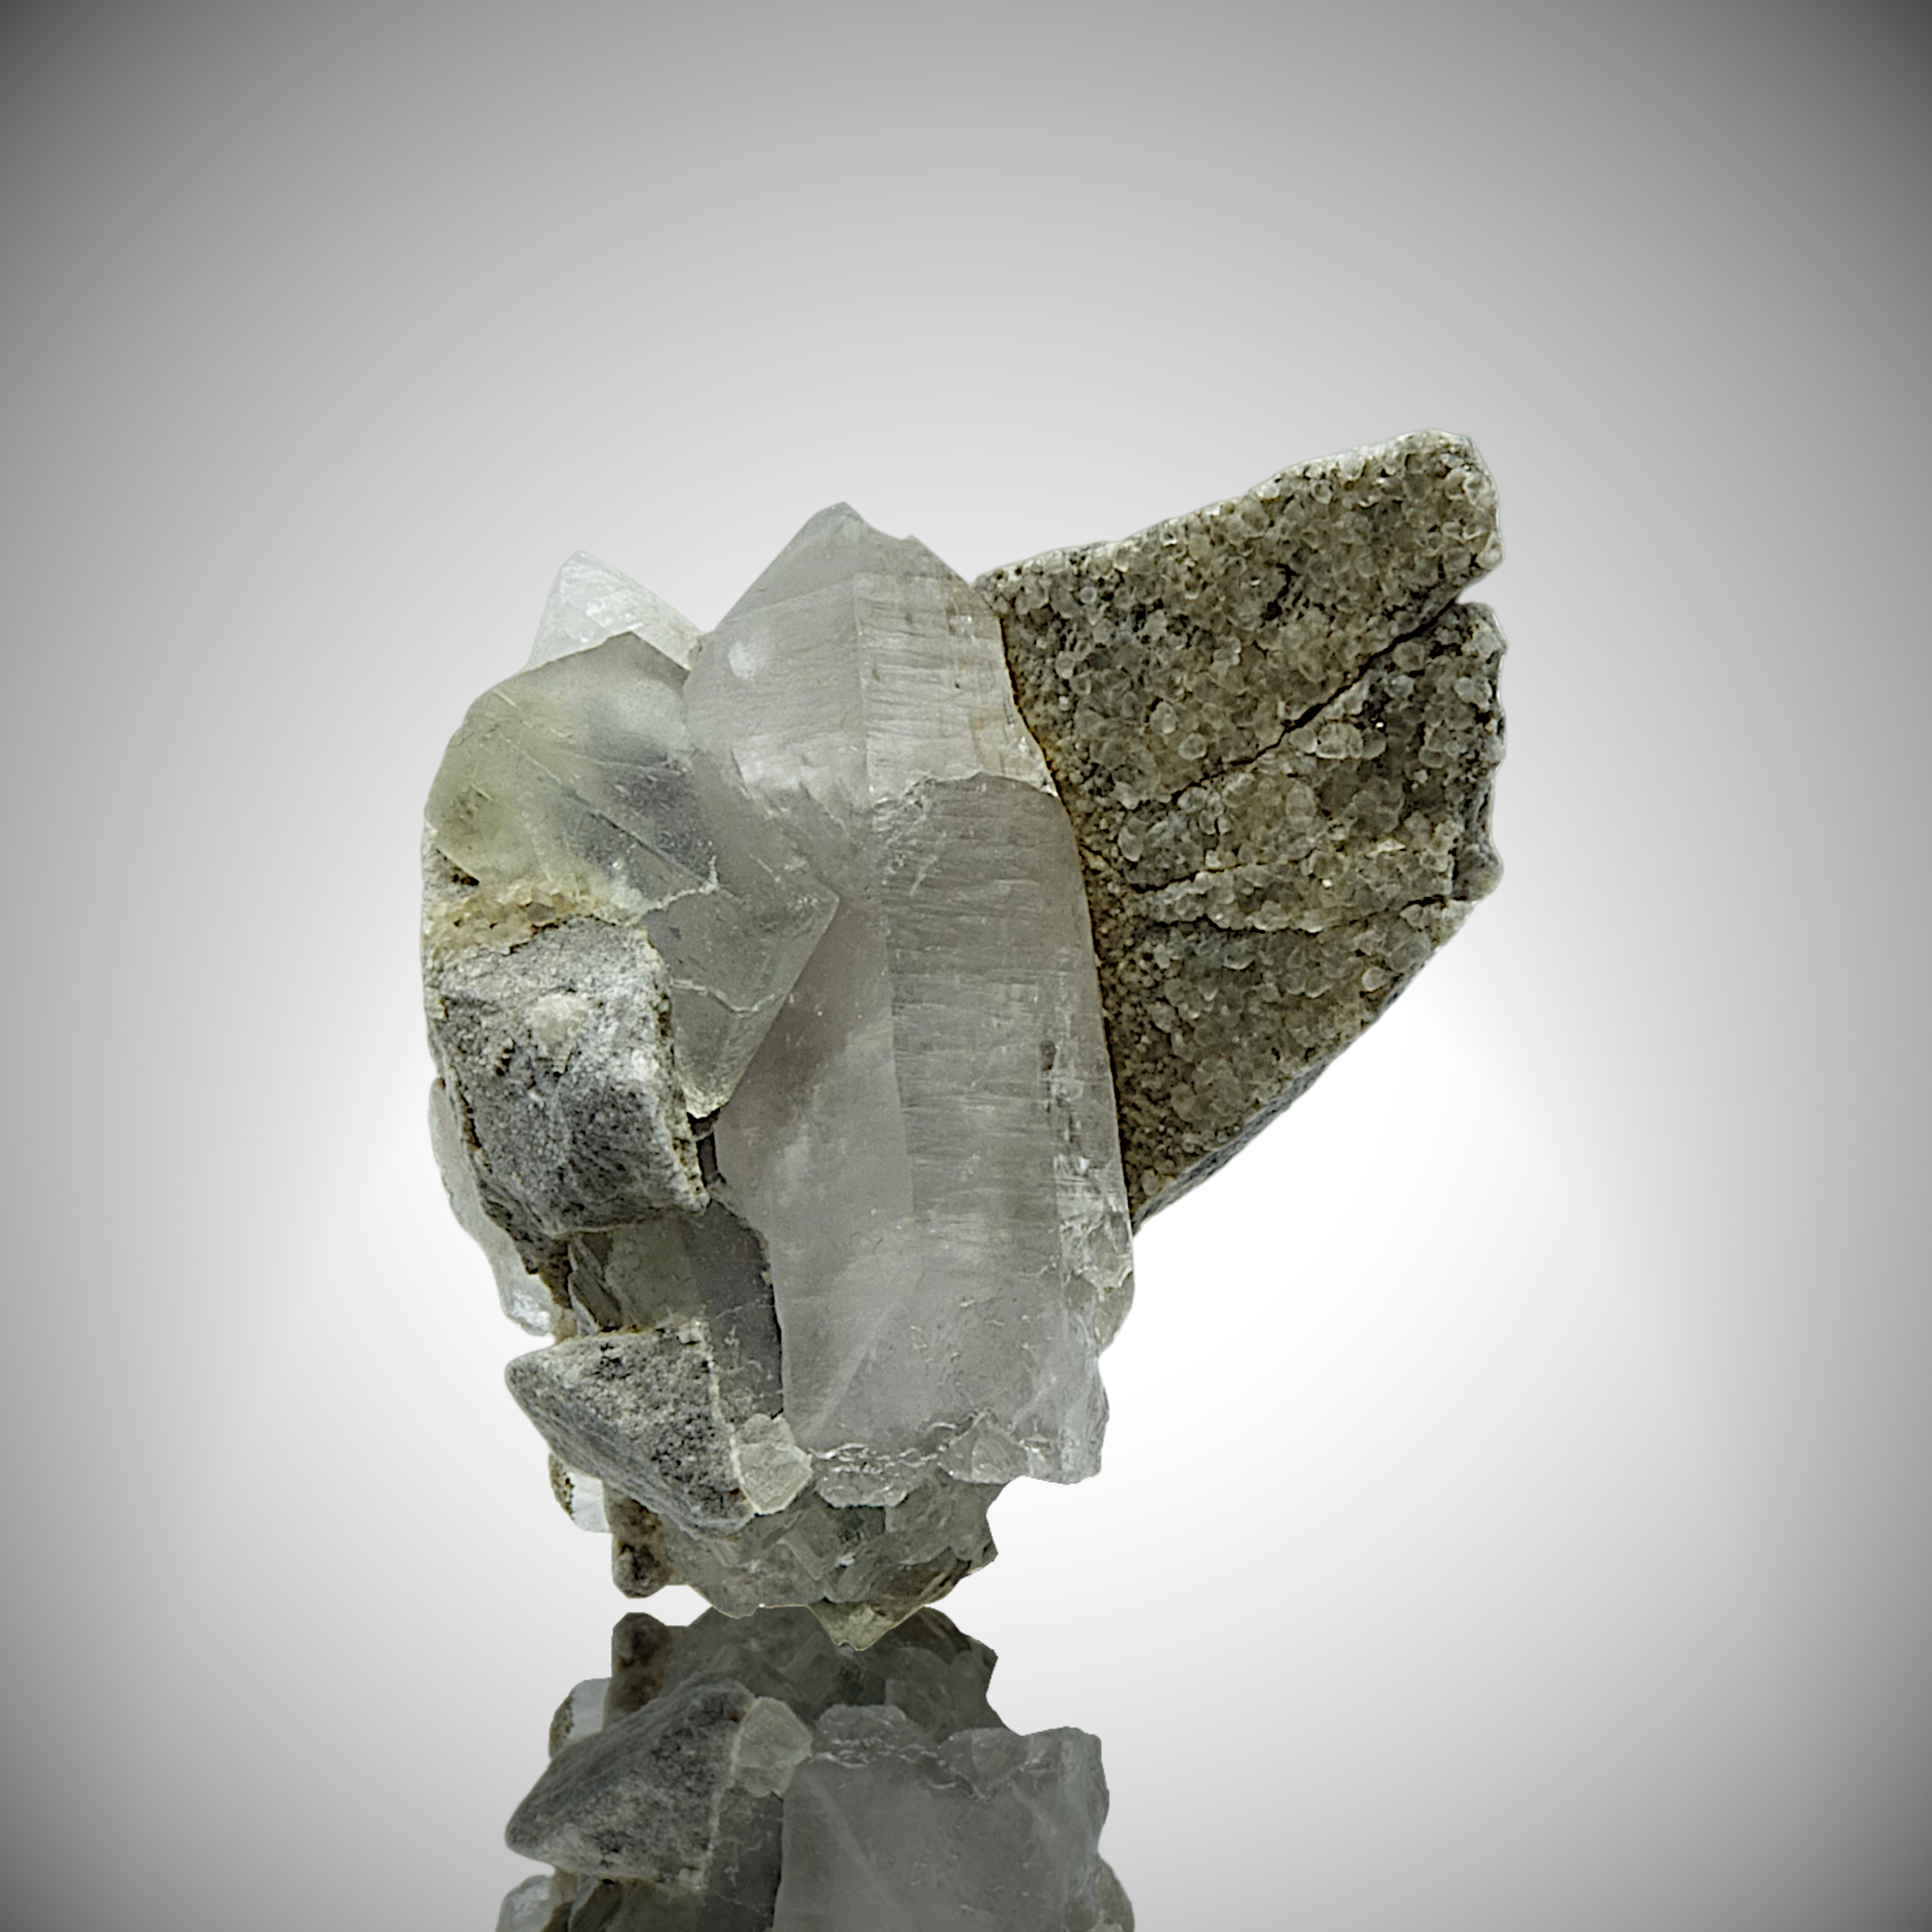 Bergkristall/Fluorit/Calcit, Lungau/Salzburg